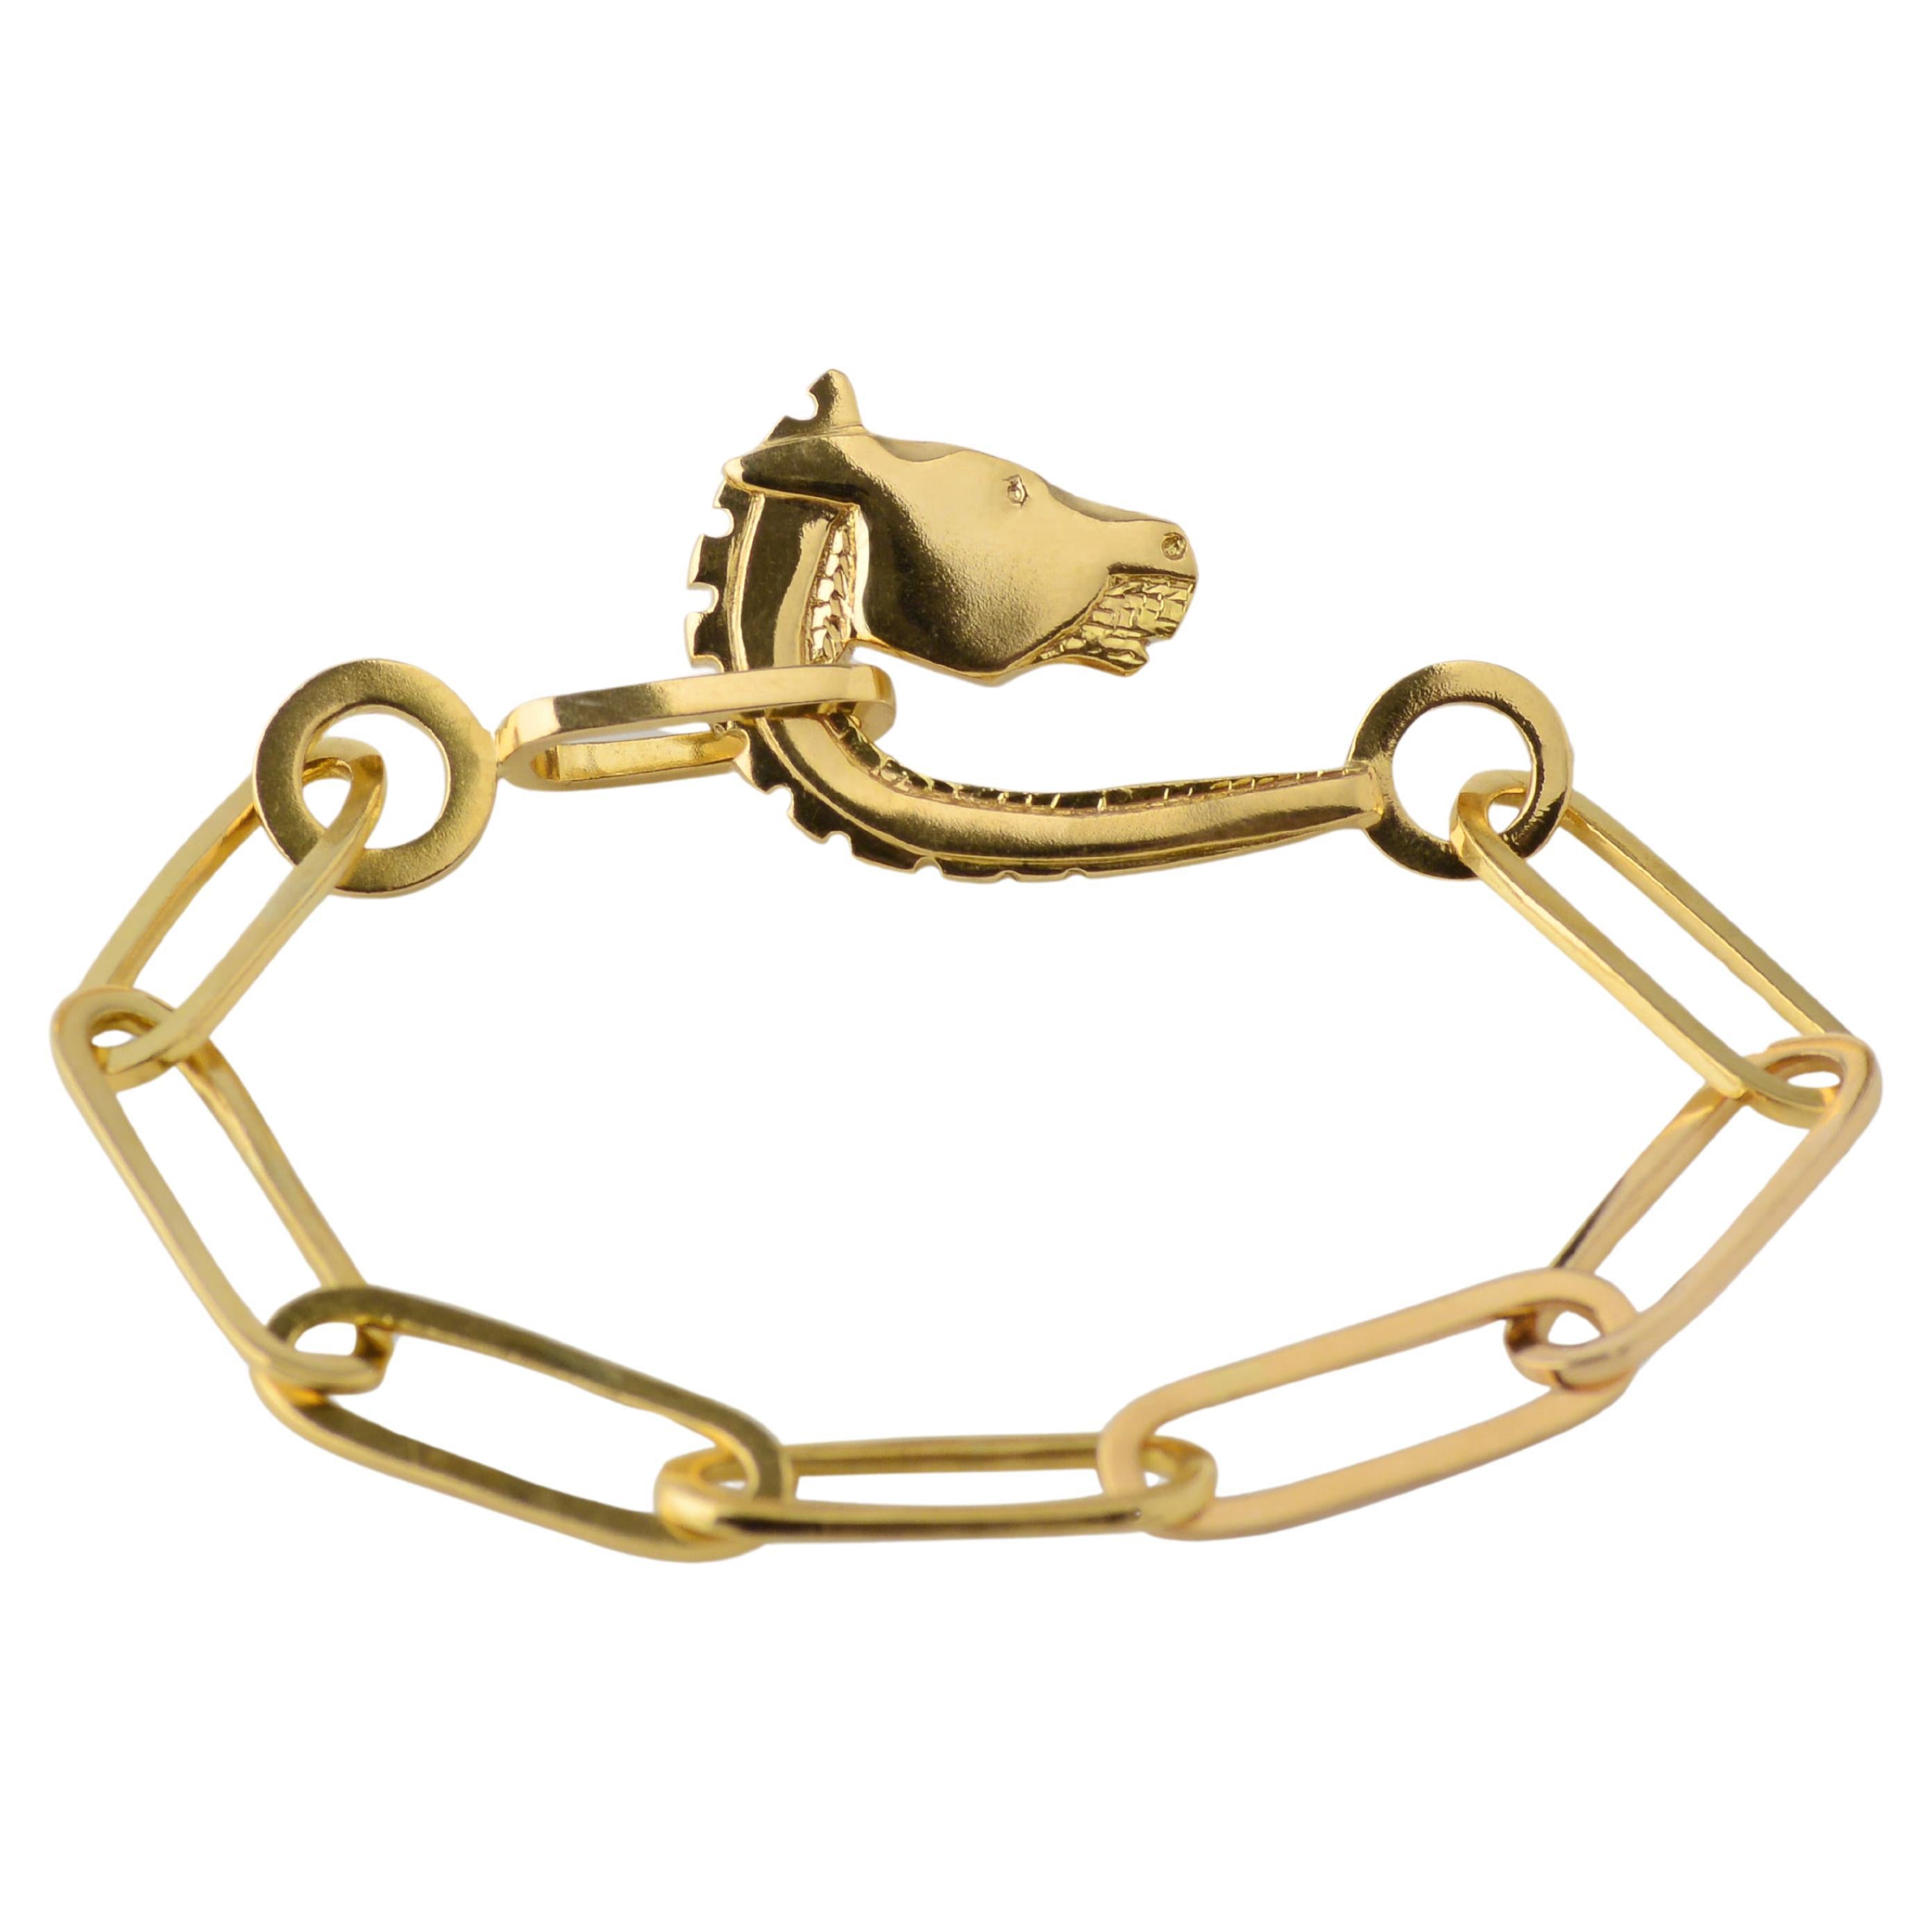 Susan Crow Studio 18kt Fairmined Gold Trojan Horse Clasp with Links Bracelet For Sale